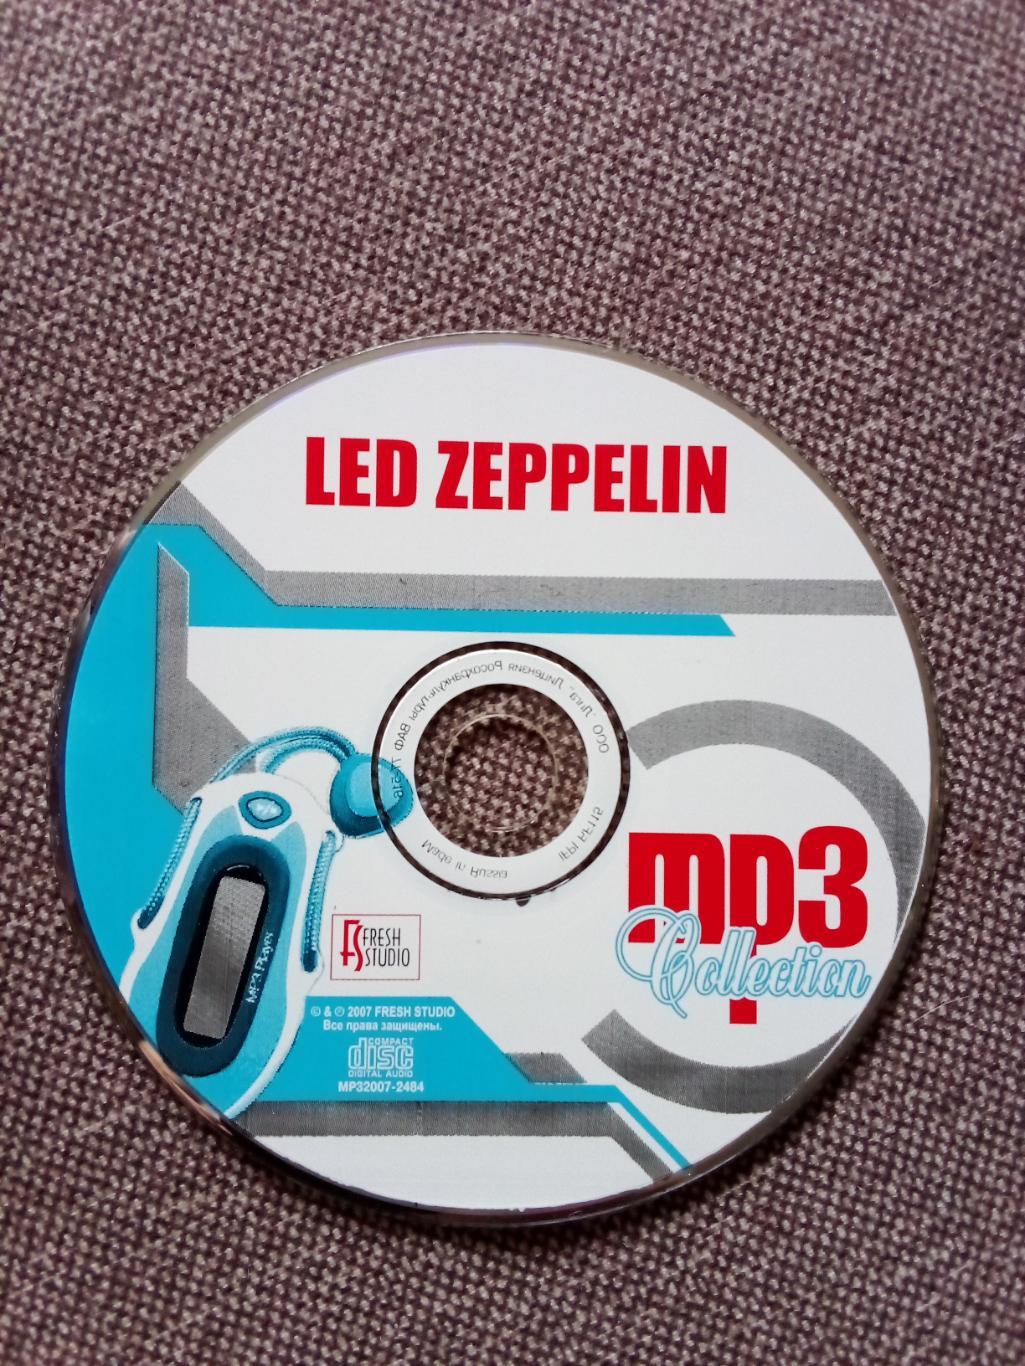 CD MP - 3 диск : группаLed Zeppelin1969 - 1982 гг. 12 альбомов (Рок-музыка 5